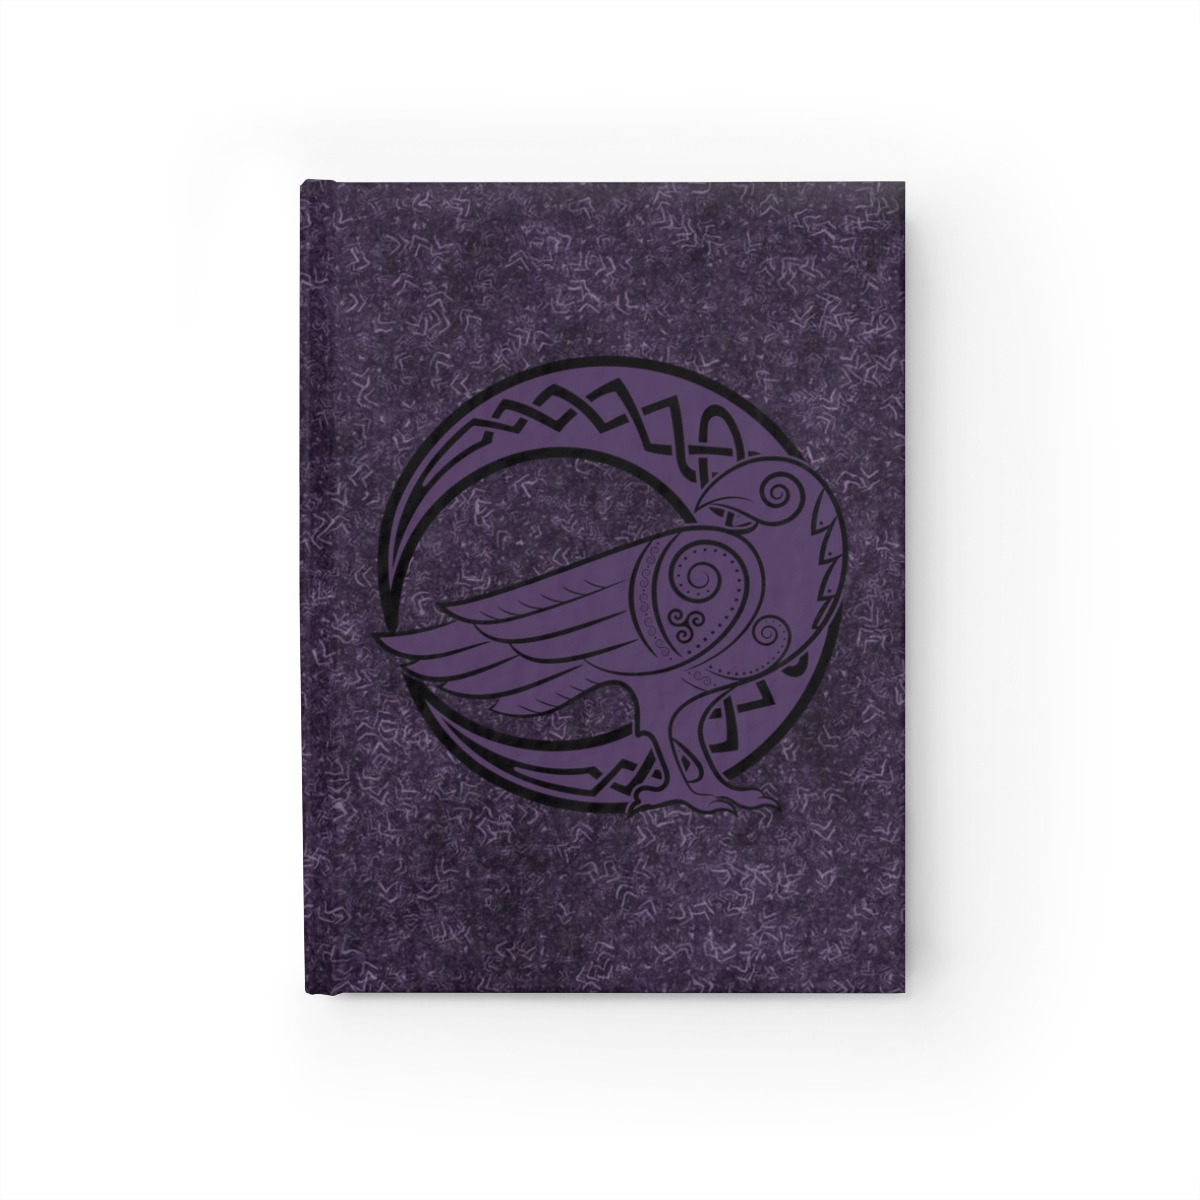 Purple Raven Crescent Moon Journal – Ruled Line